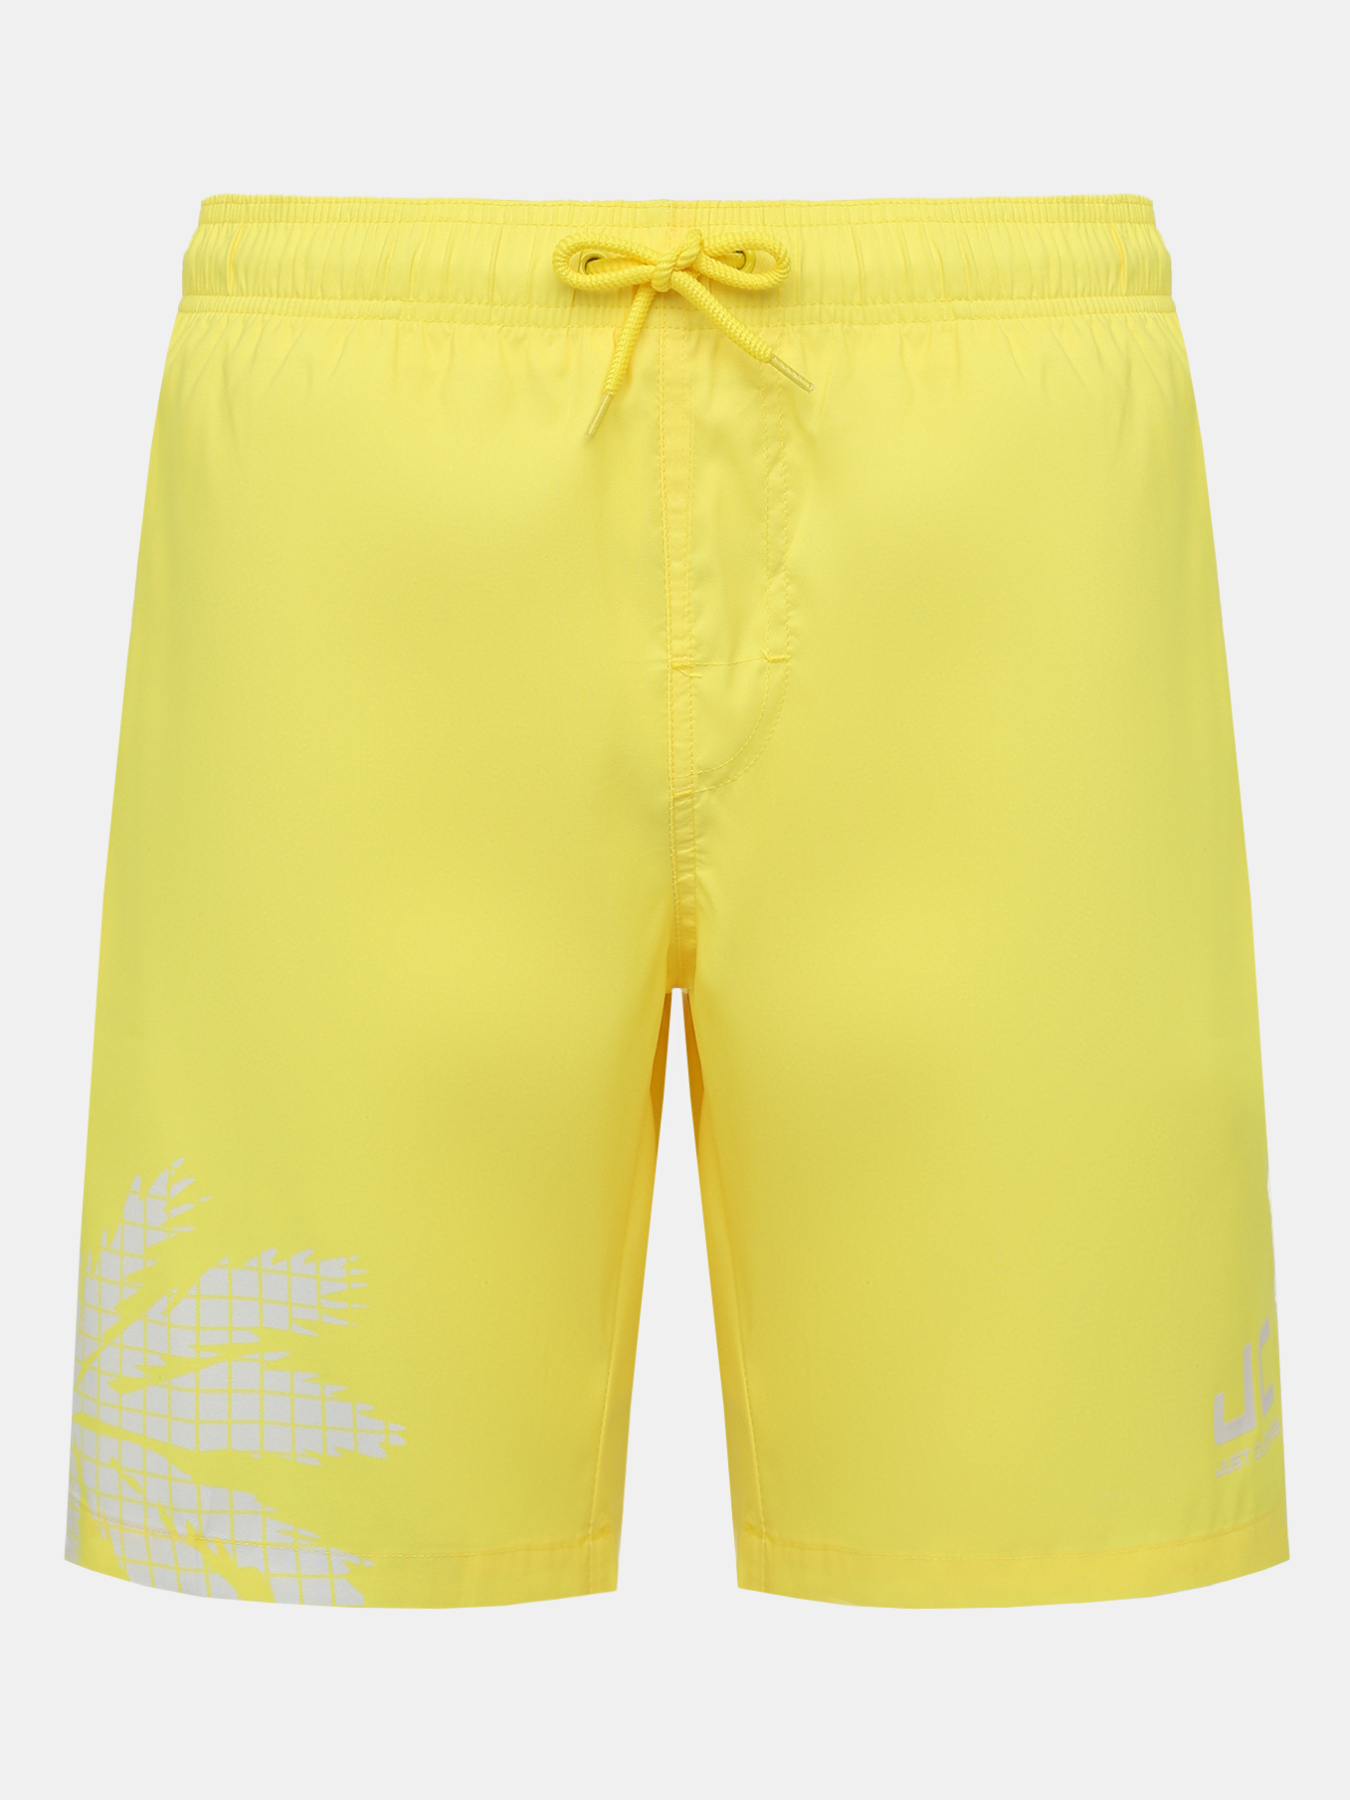 Шорты для плавания мужские Just Clothes 454104 желтые 52 RU